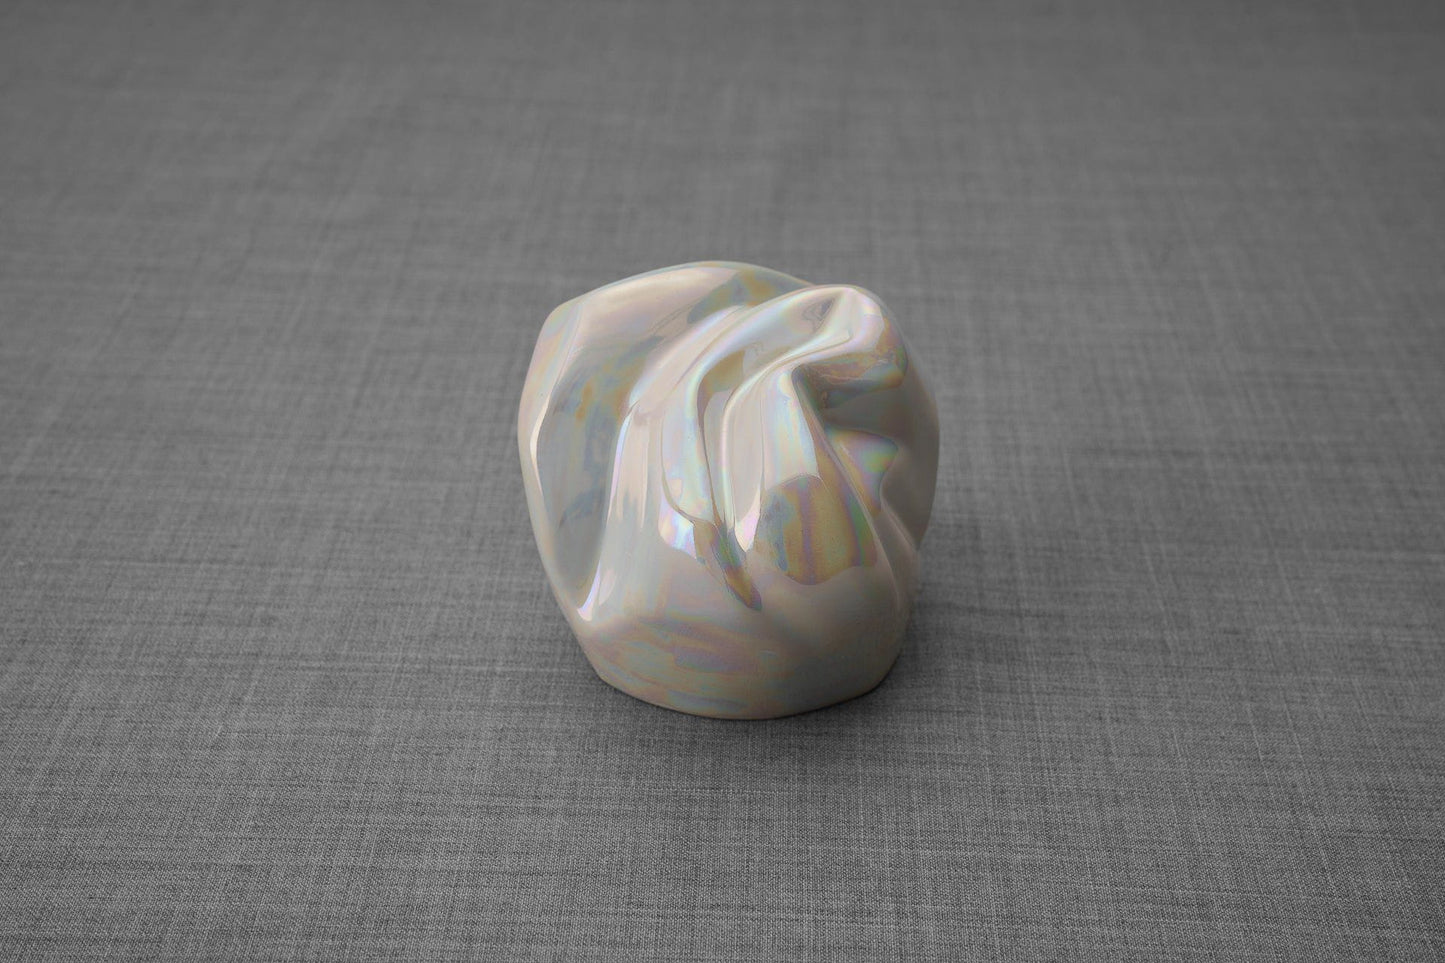 Pulvis Art Urns Keepsake Urn Cremation Keepsake Urn "Precious" - Small | Pearly White | Ceramic